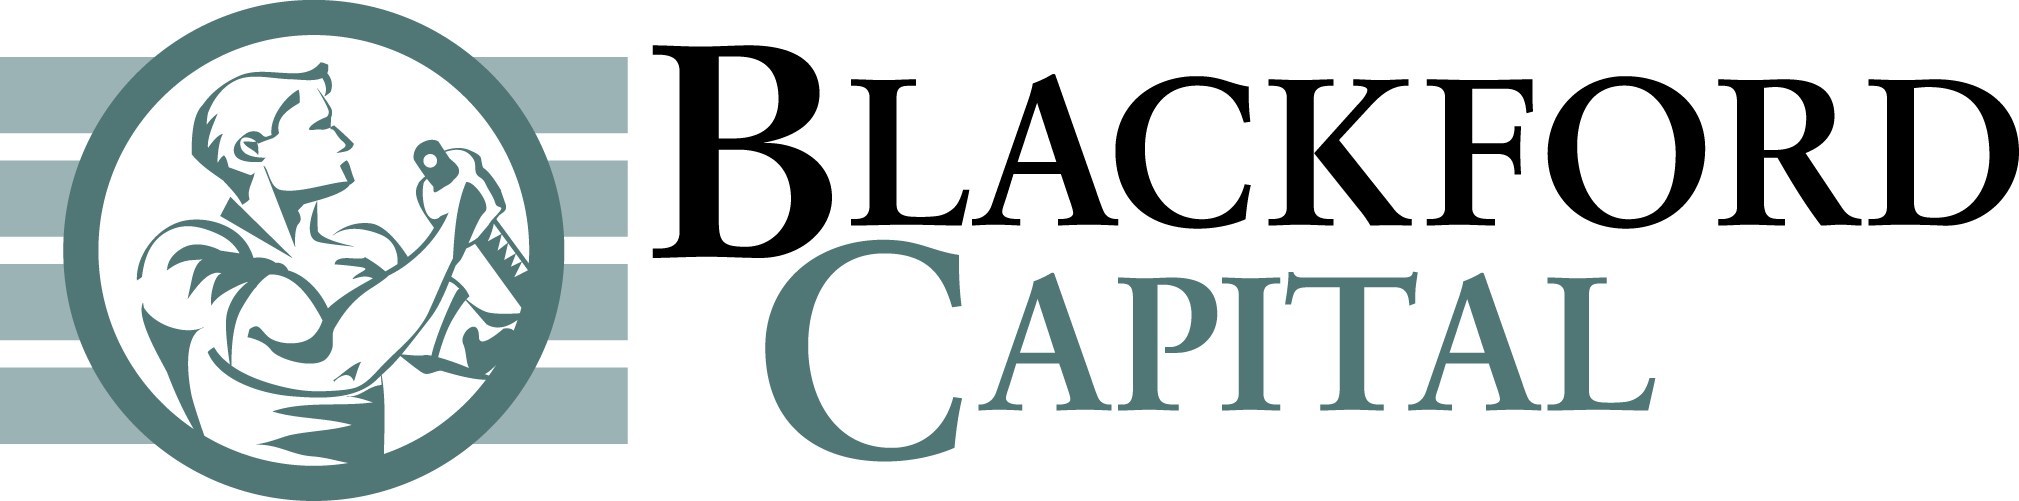 Blackford Capital Exits Custom Profile